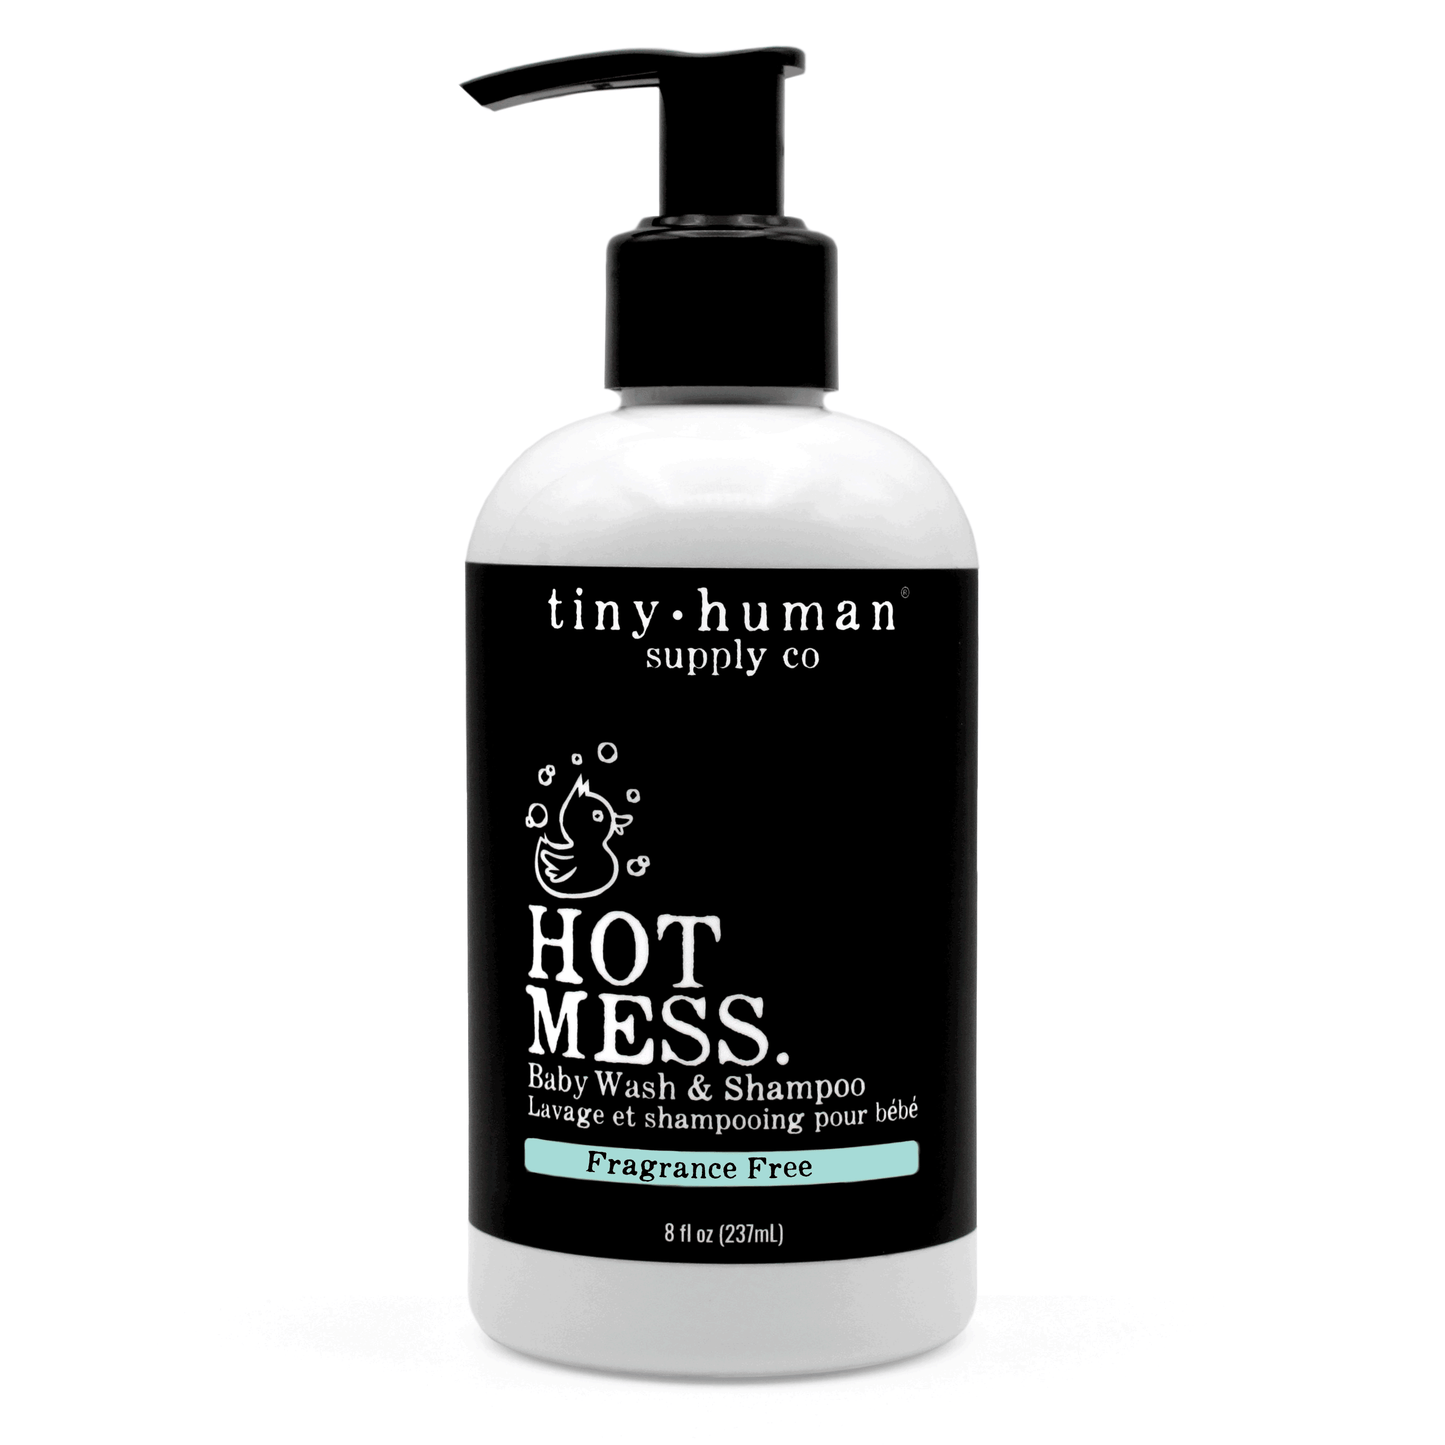 Hot Mess™ Shampoo and Baby Wash 8oz - Fragrance Free